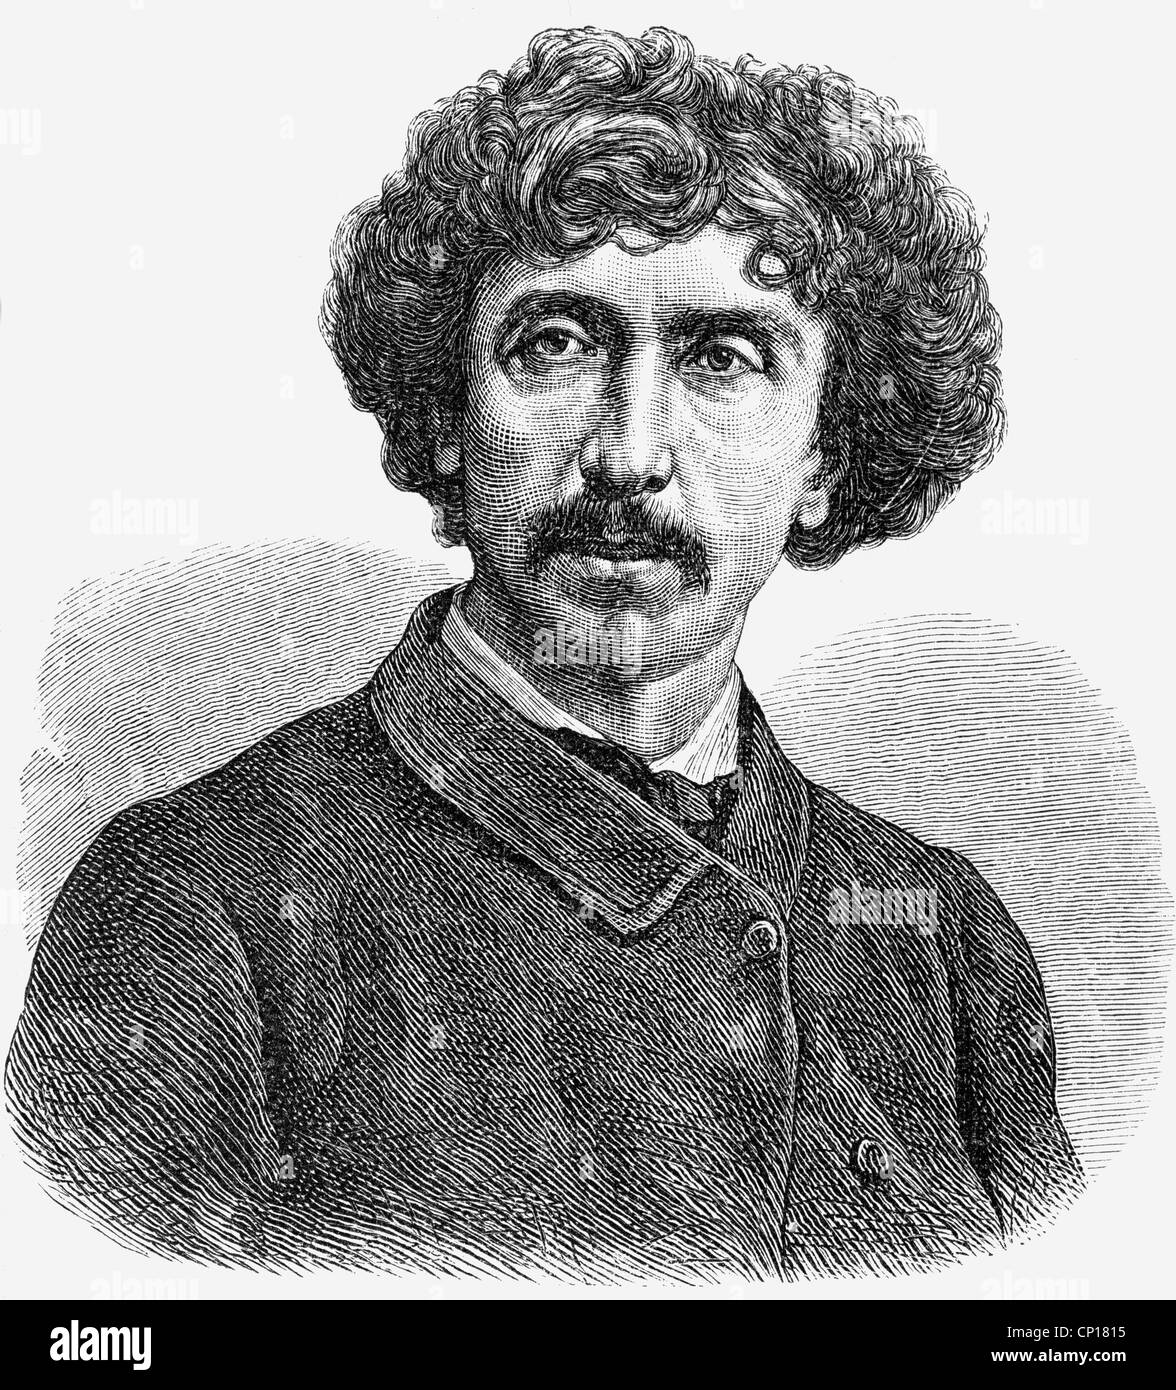 Garnier, Charles, 6.11.1825 - 3.8.1898, French architect, portrait, wood engraving, 19th century, Stock Photo